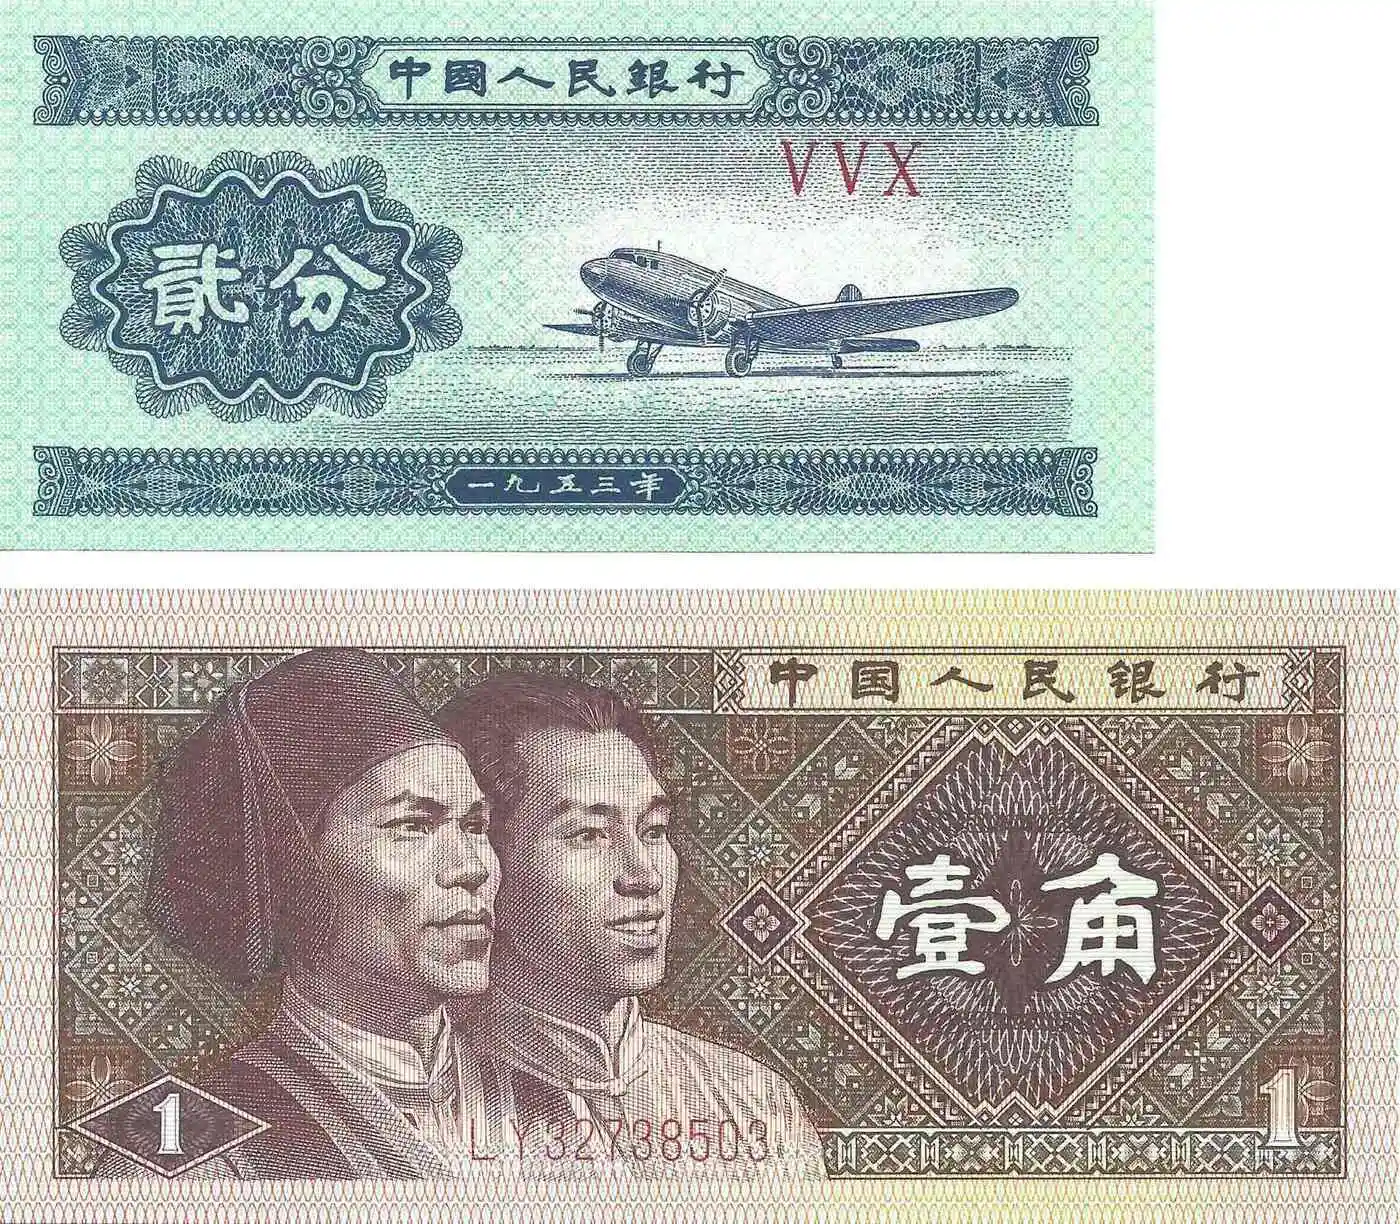 Июань. Китай 1 юань. Китайская банкнота 1 юань. Валюта Китая юань Дзяо. Китай 1 юань Китай банкнота.